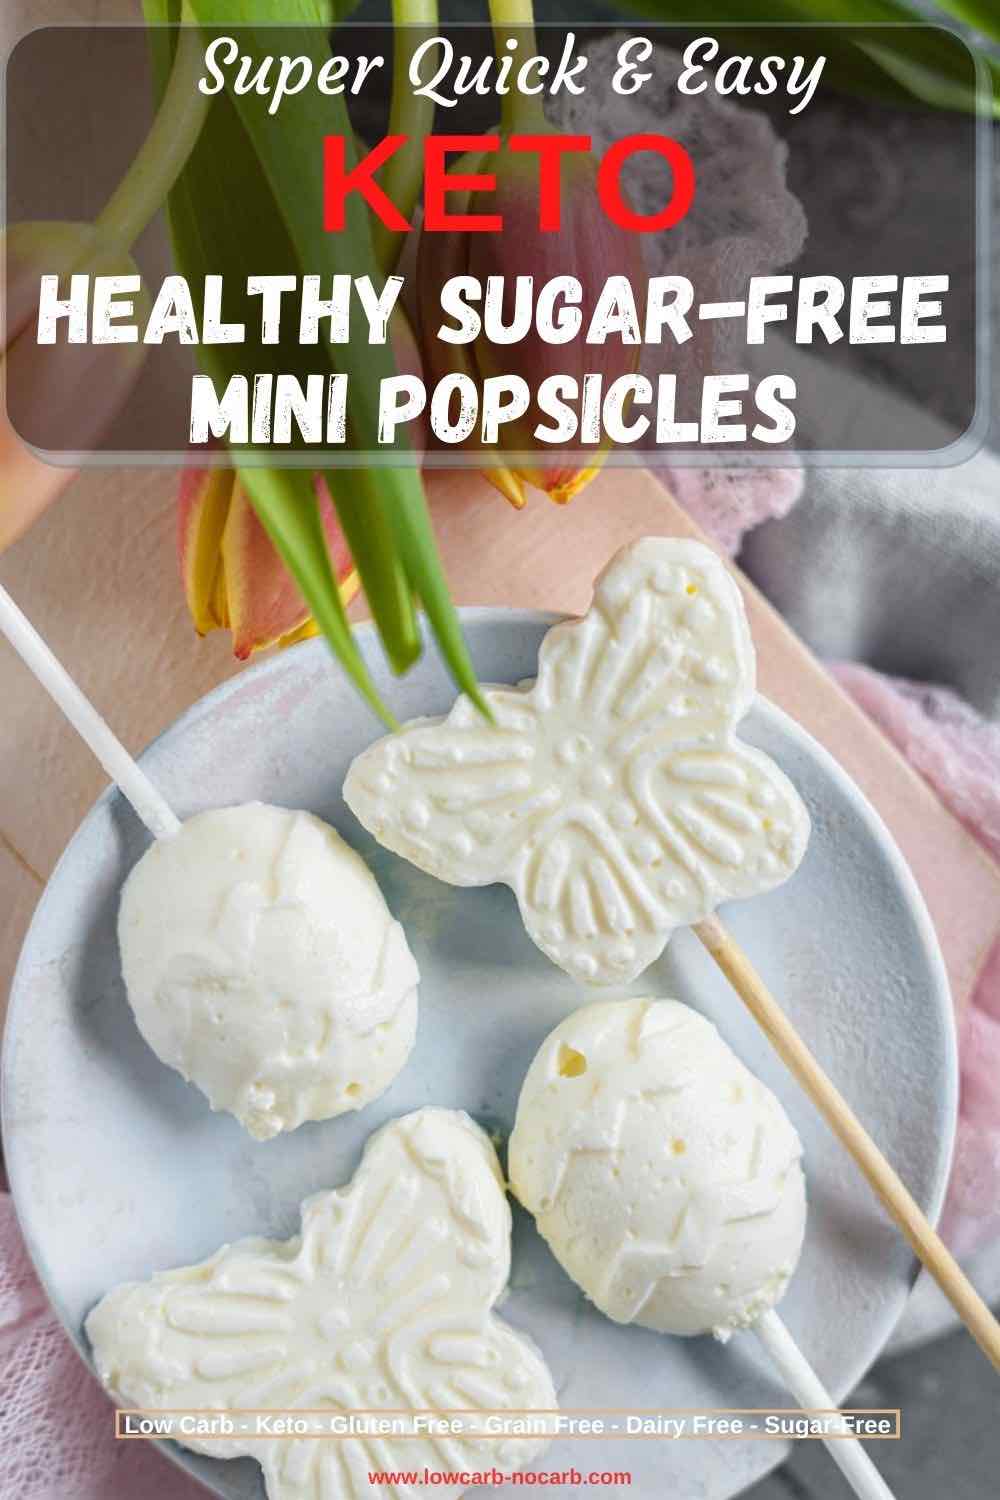 Homemade Sugar Free Ice Pops on a blue mini plate